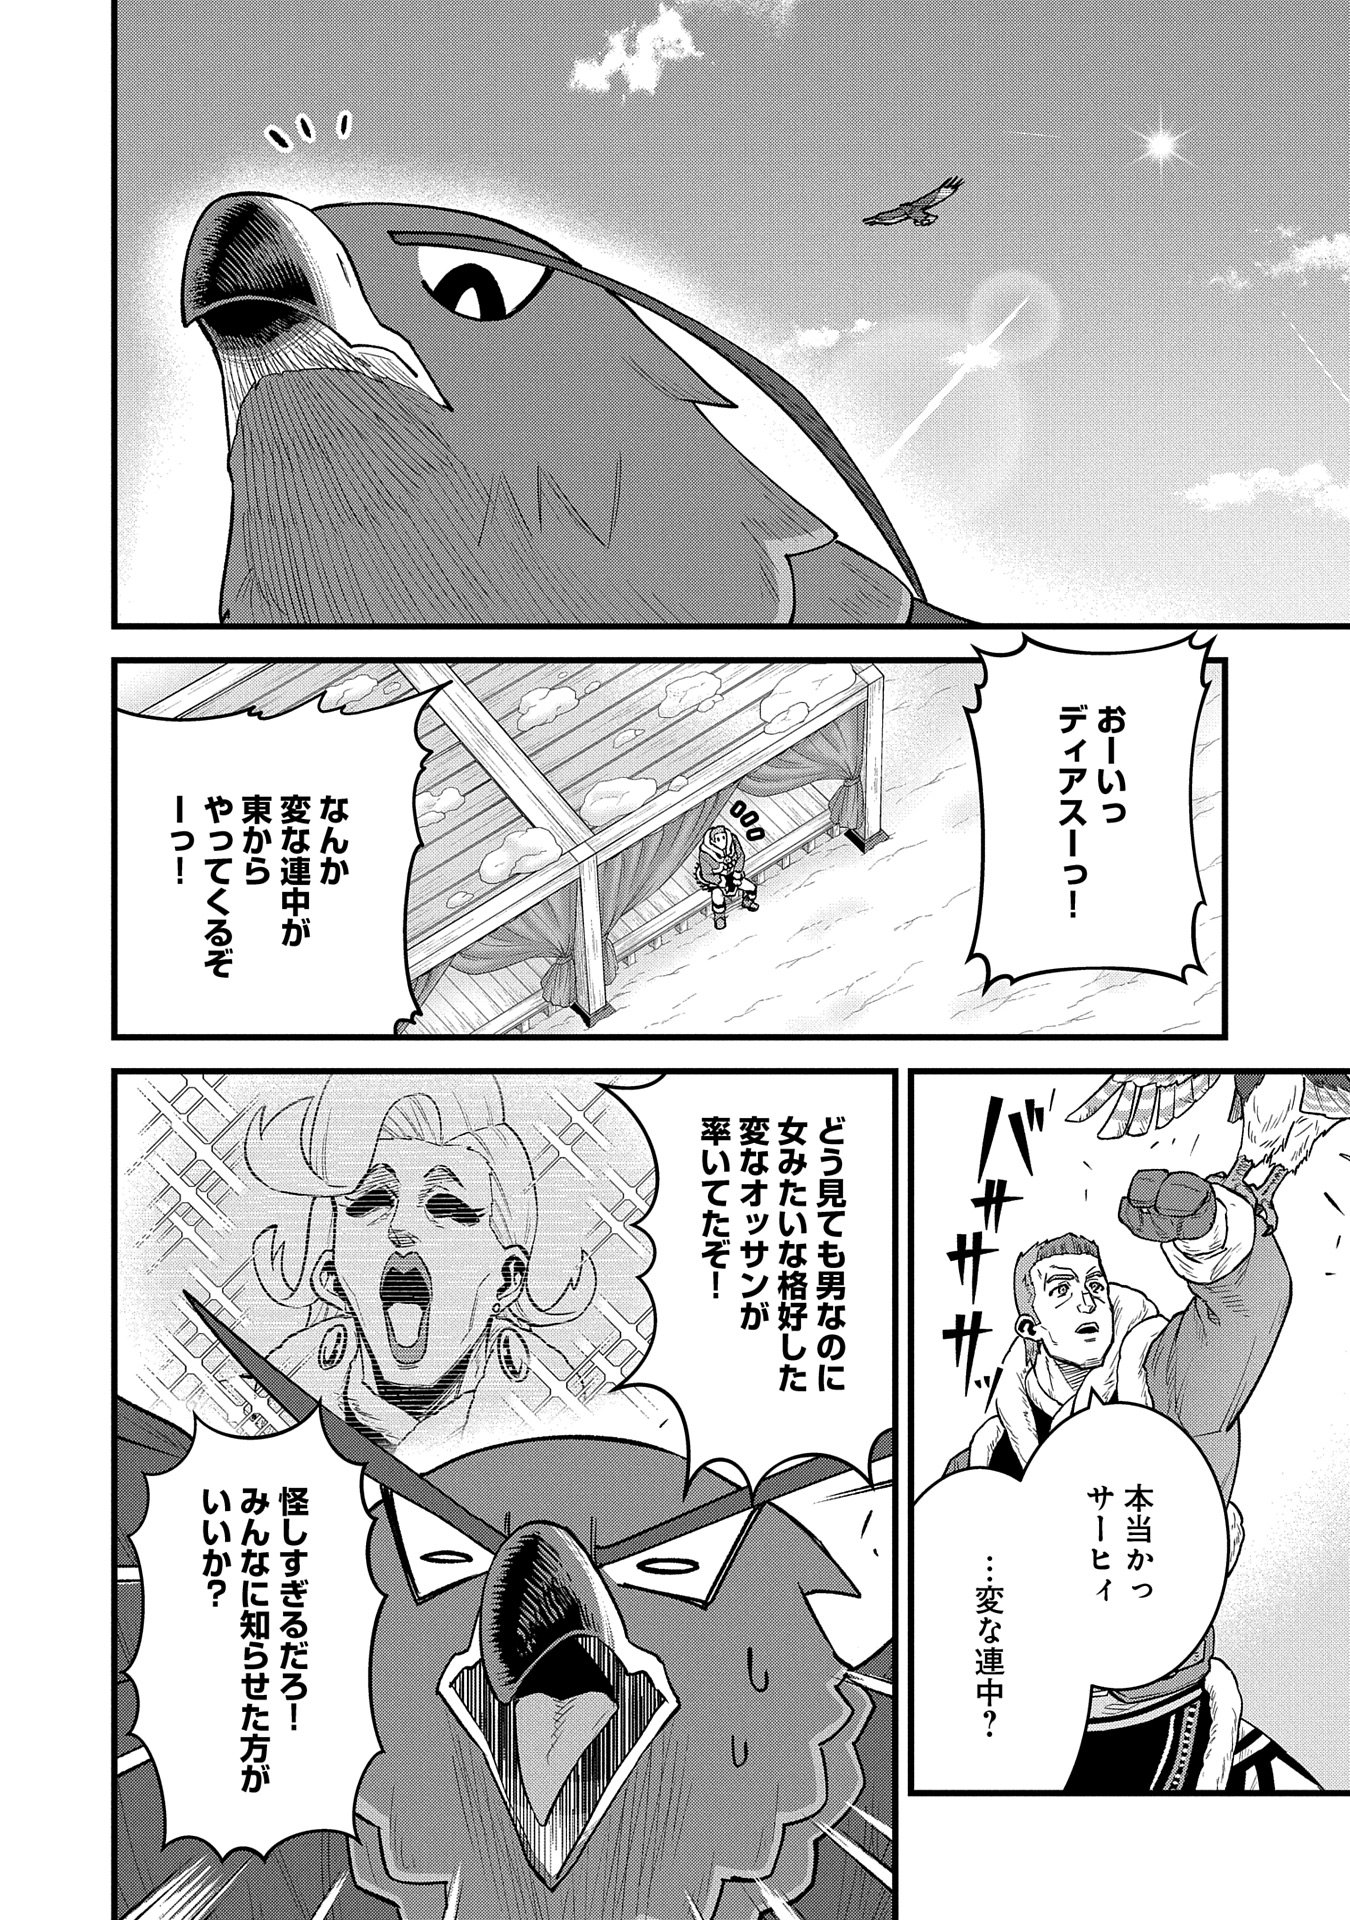 Ryoumin 0-nin Start no Henkyou Ryoushusama - Chapter 52 - Page 2